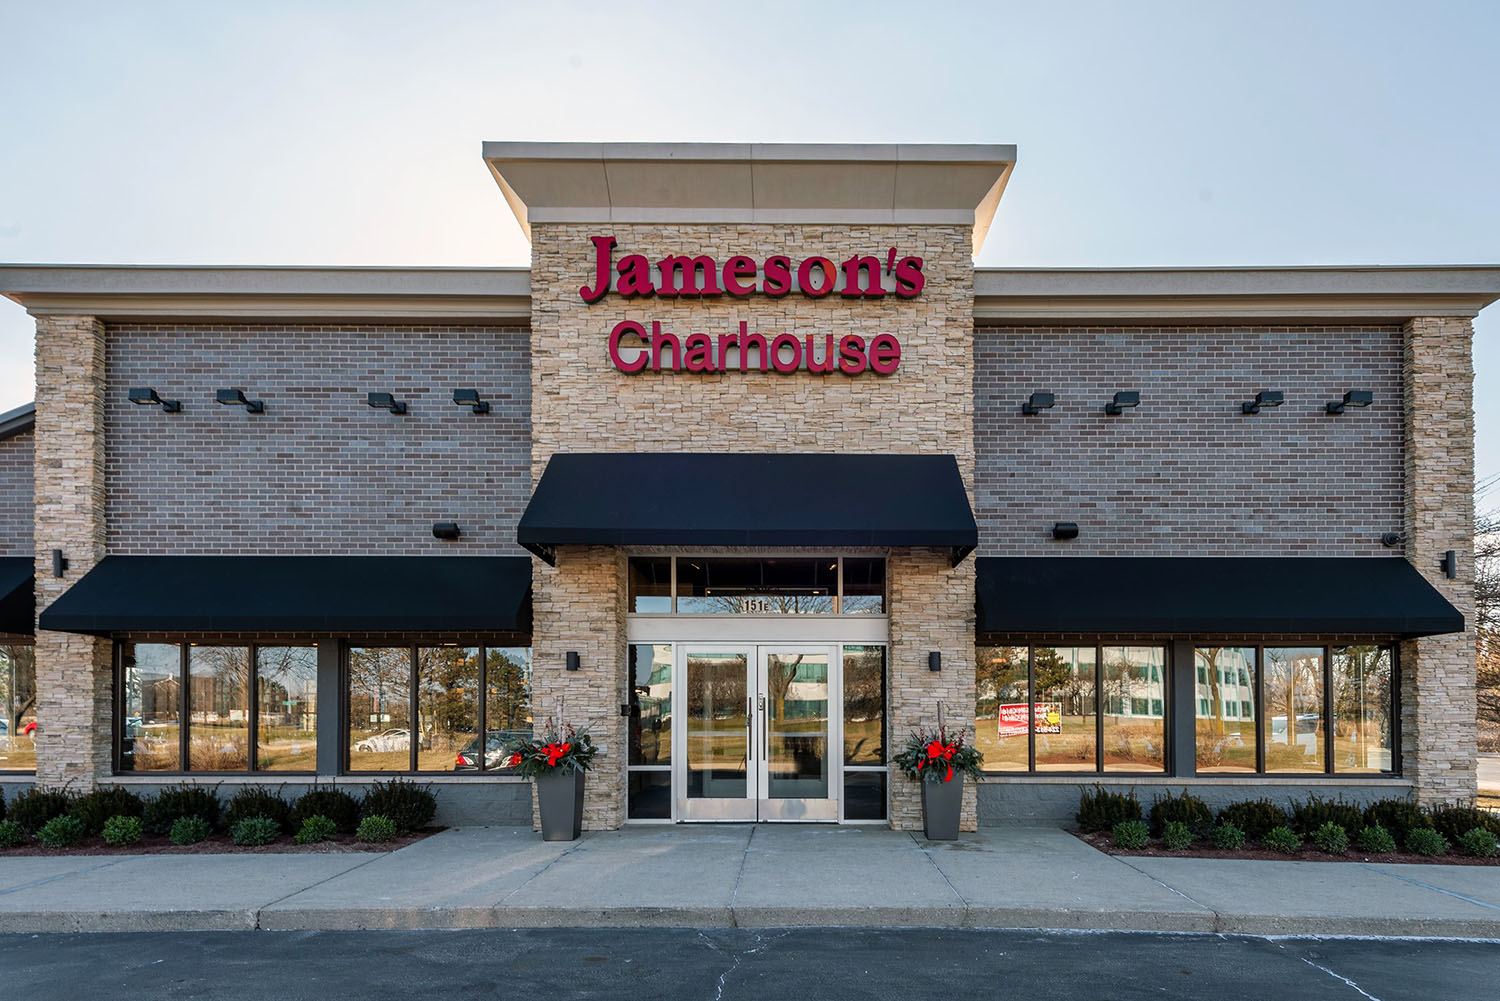 Jameson's Charhouse